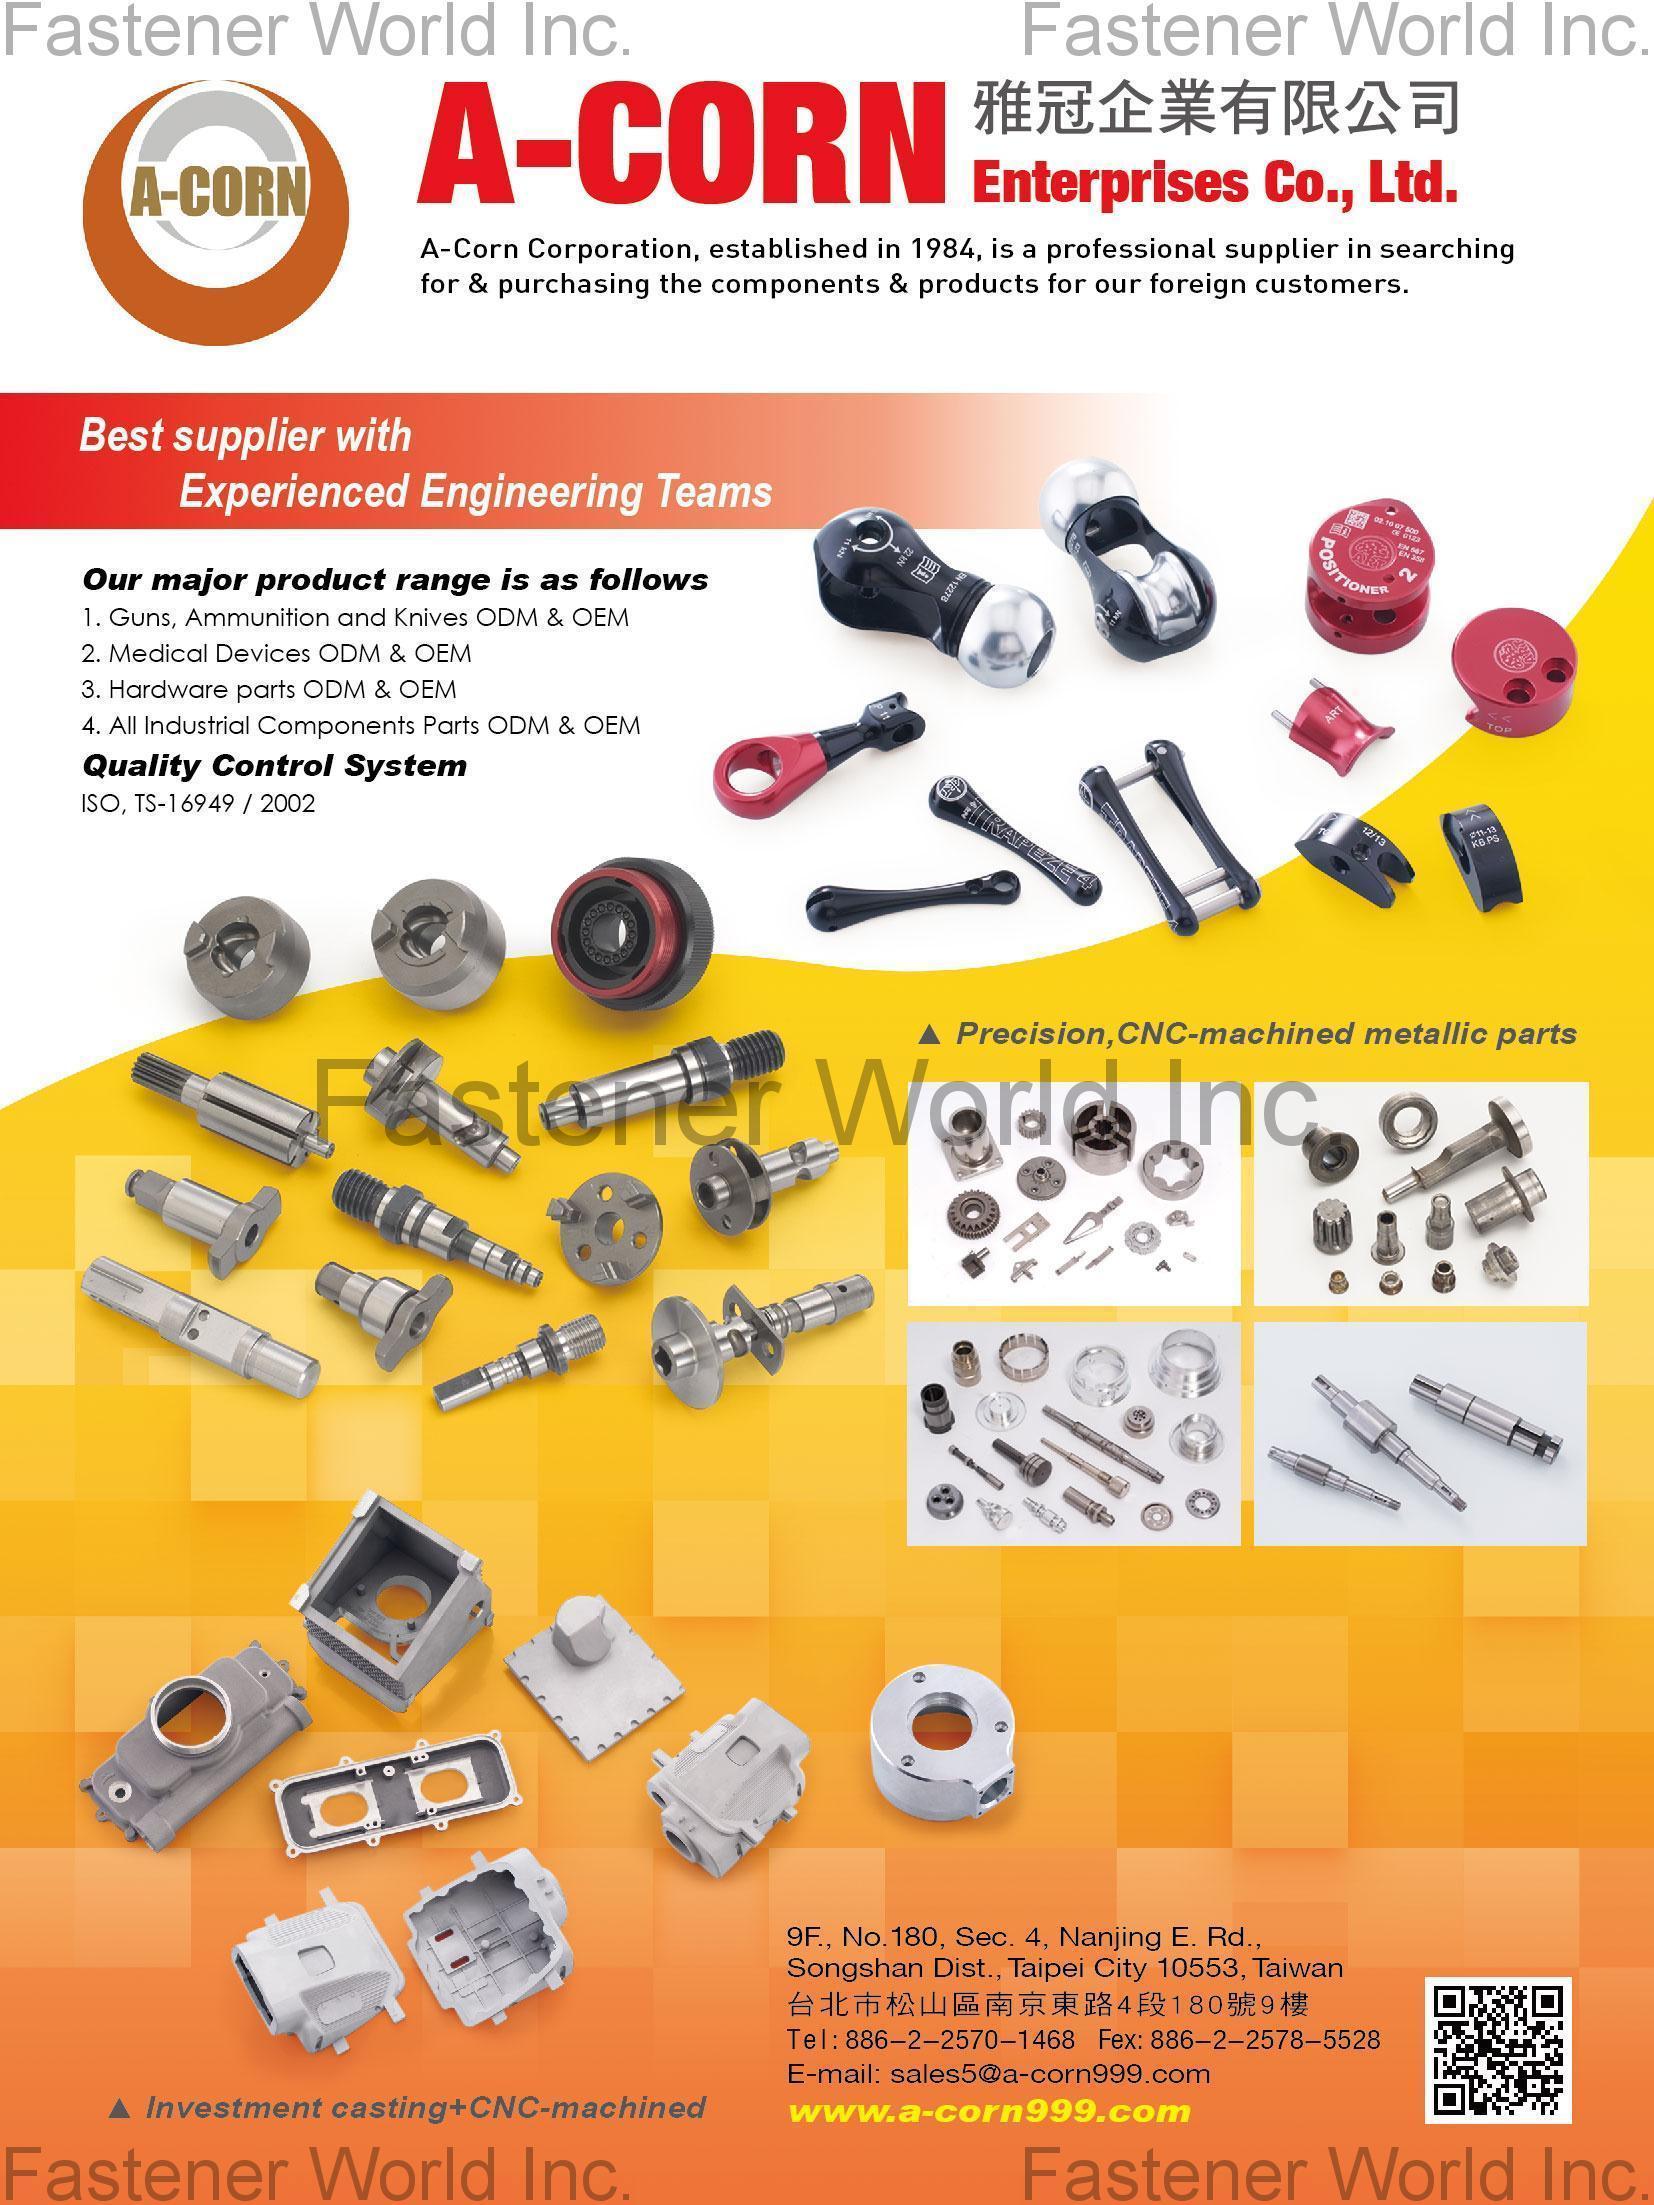 A-CORN ENTERPRISES CO., LTD. , Investment Casting + CNC-machined, Precision, CNC-machined metallic parts , Turning Parts